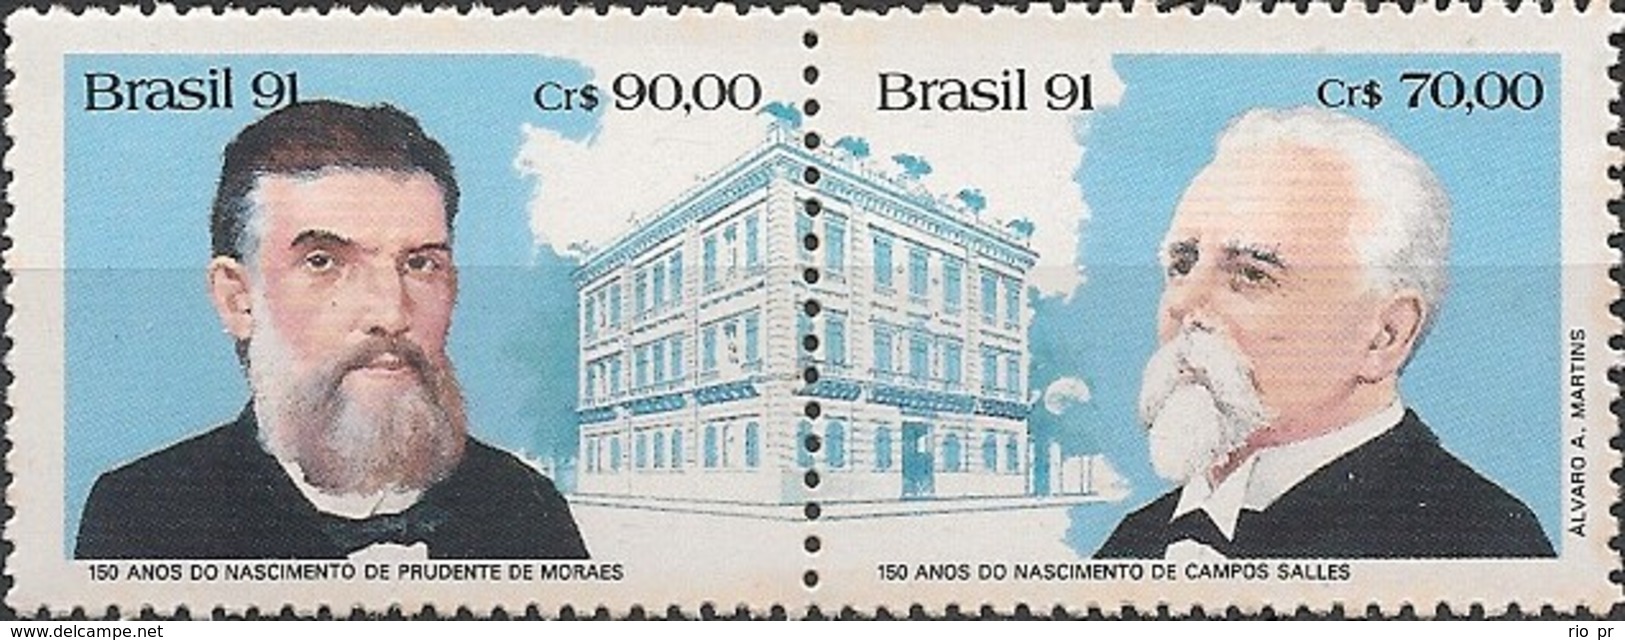 BRAZIL - SE-TENANT 1st CIVILIAN PRESIDENTS, BIRTH SESQUICENTENNIALS 1991 - MNH - Unused Stamps